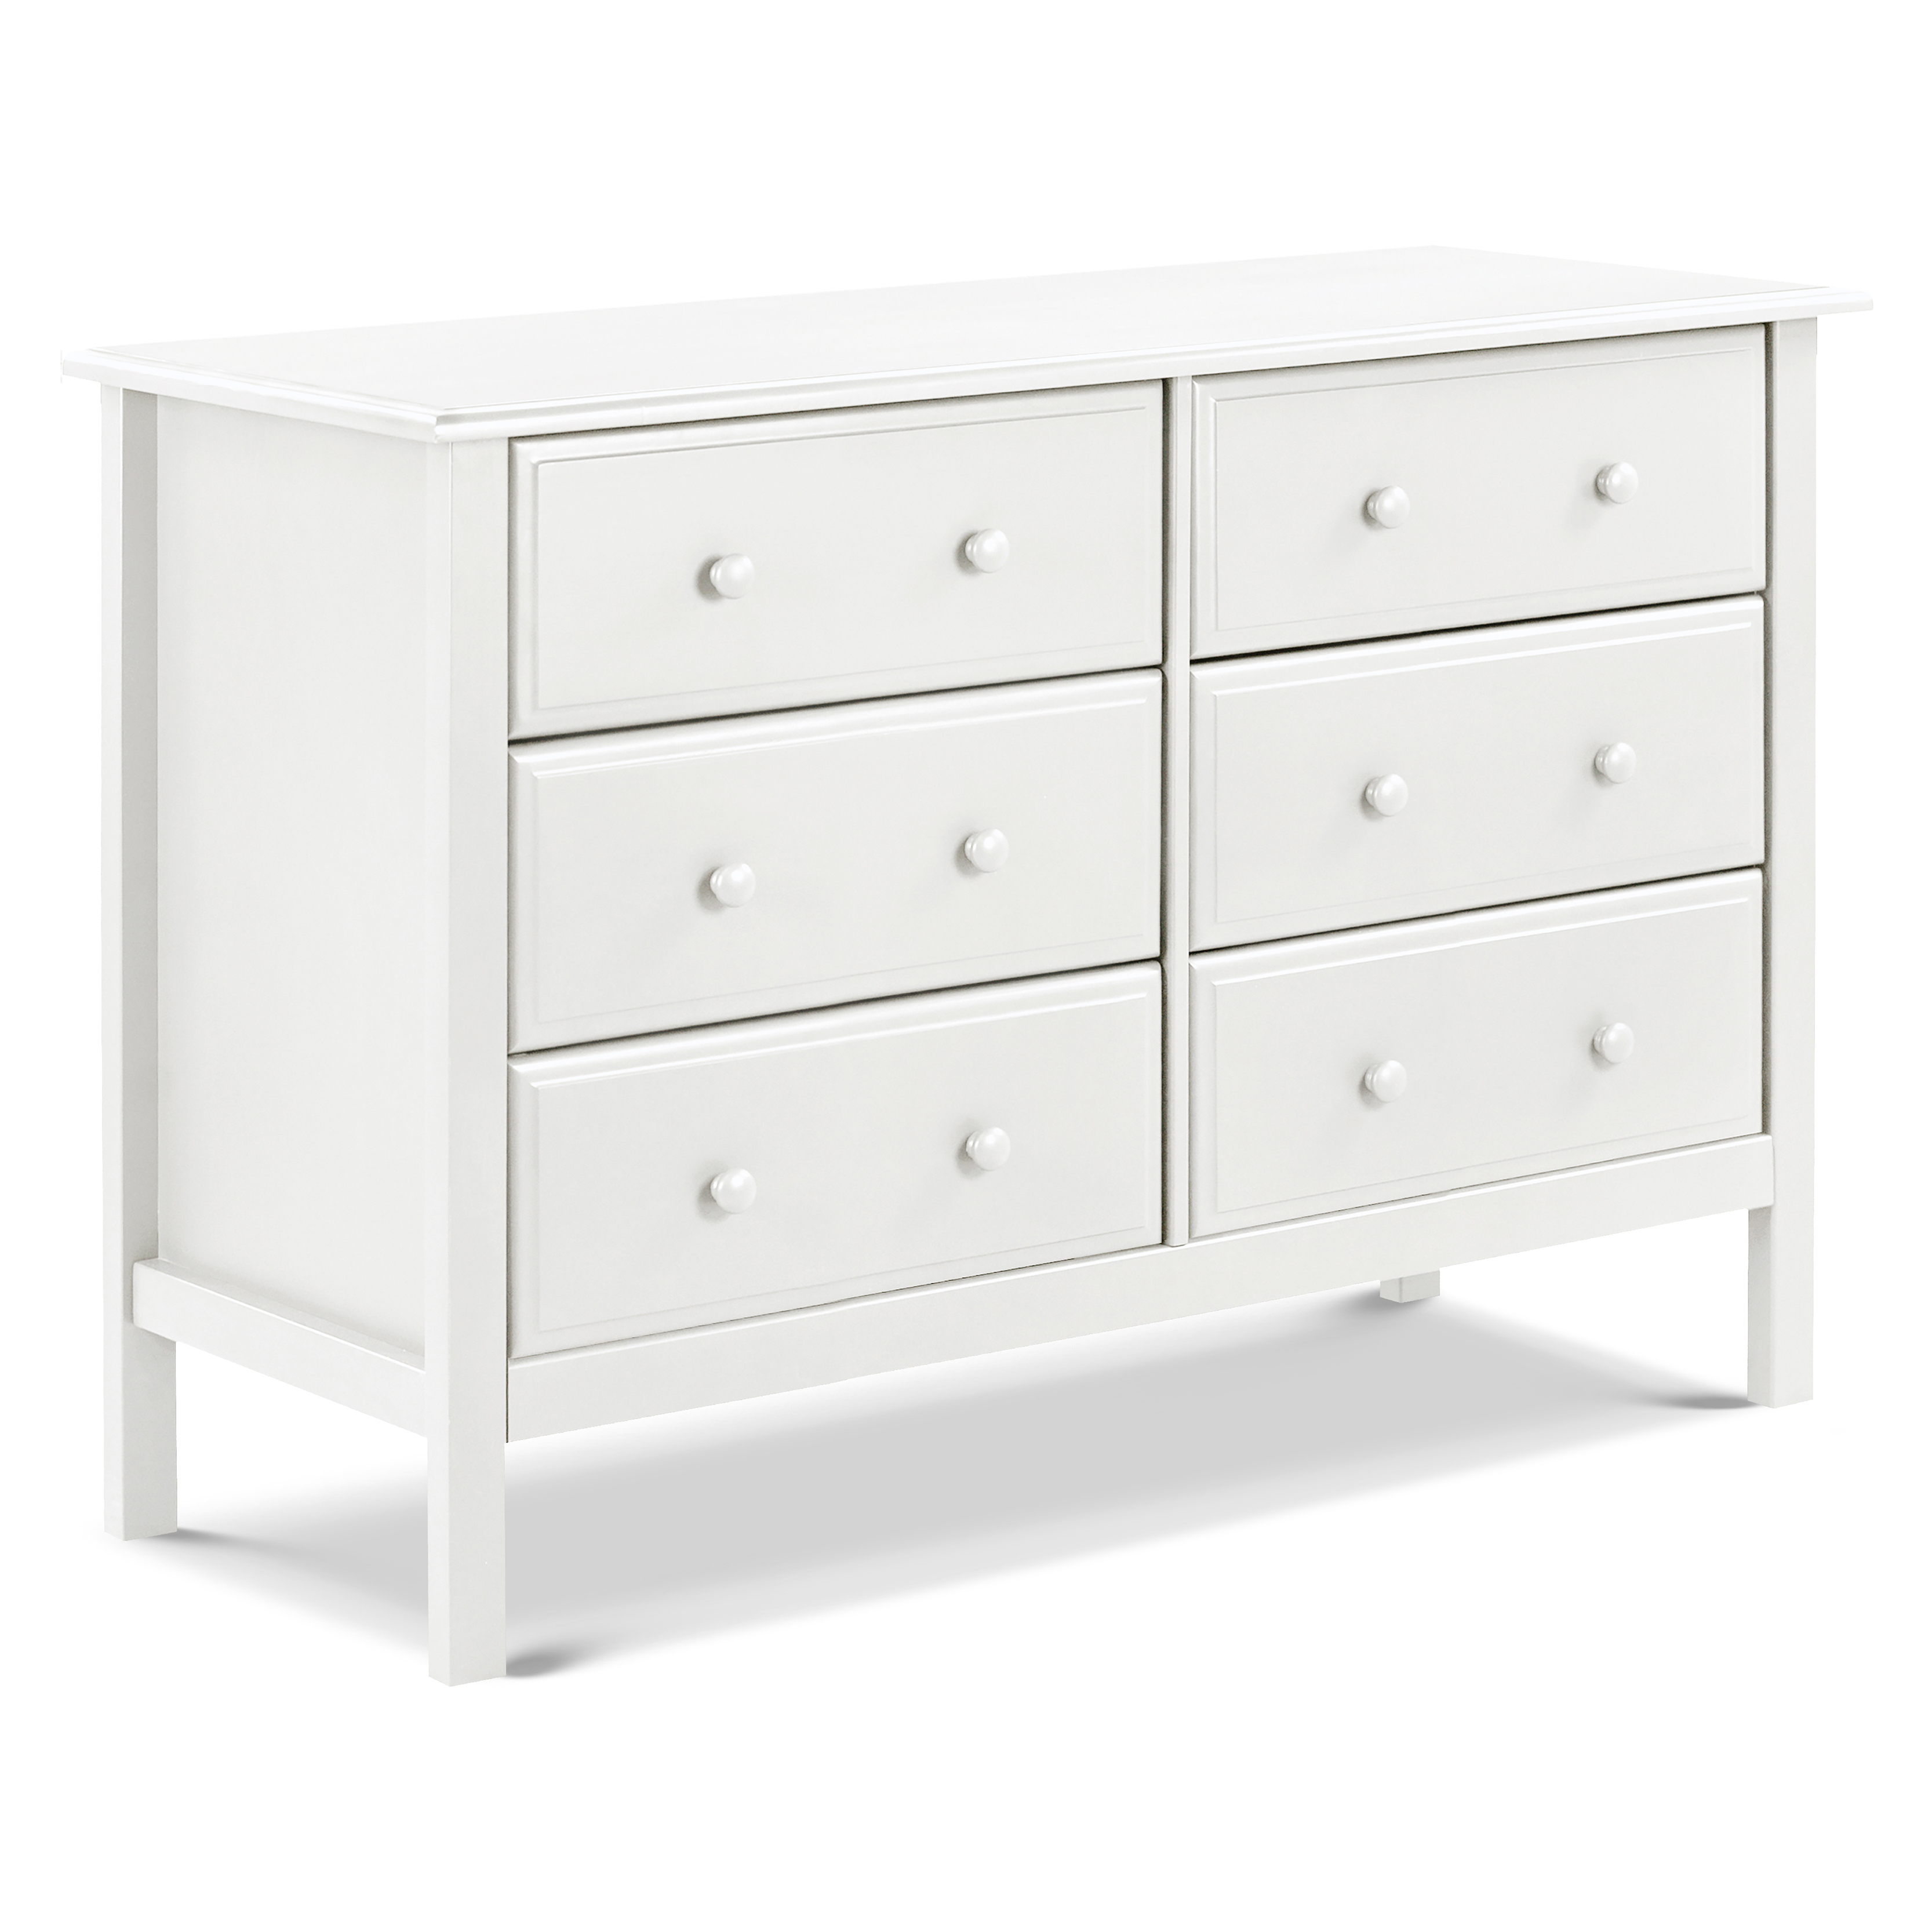 DaVinci Jayden 6-Drawer Double Dresser in White - image 1 of 5